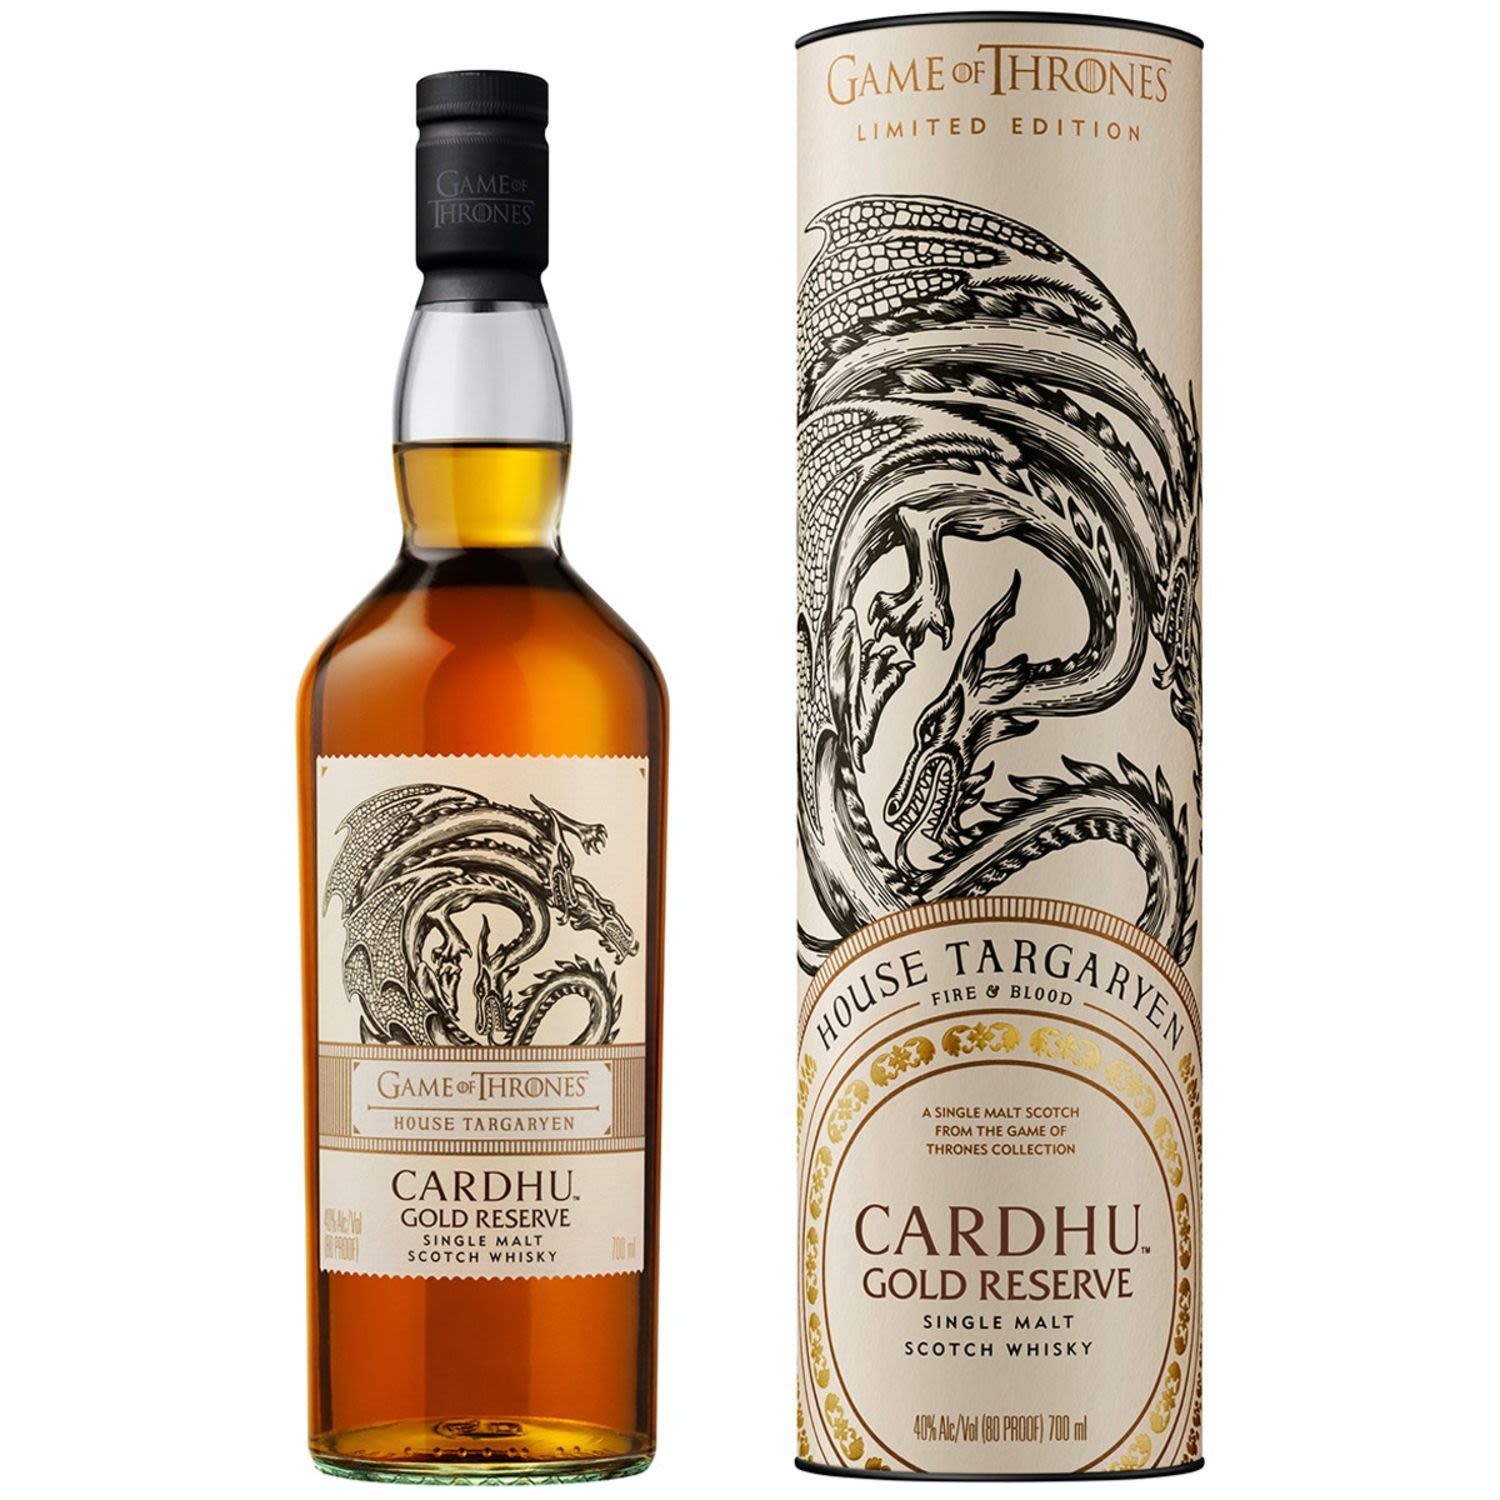 Game of Thrones House Targaryen - Cardhu Gold Reserve Scotch Whisky 700mL Bottle